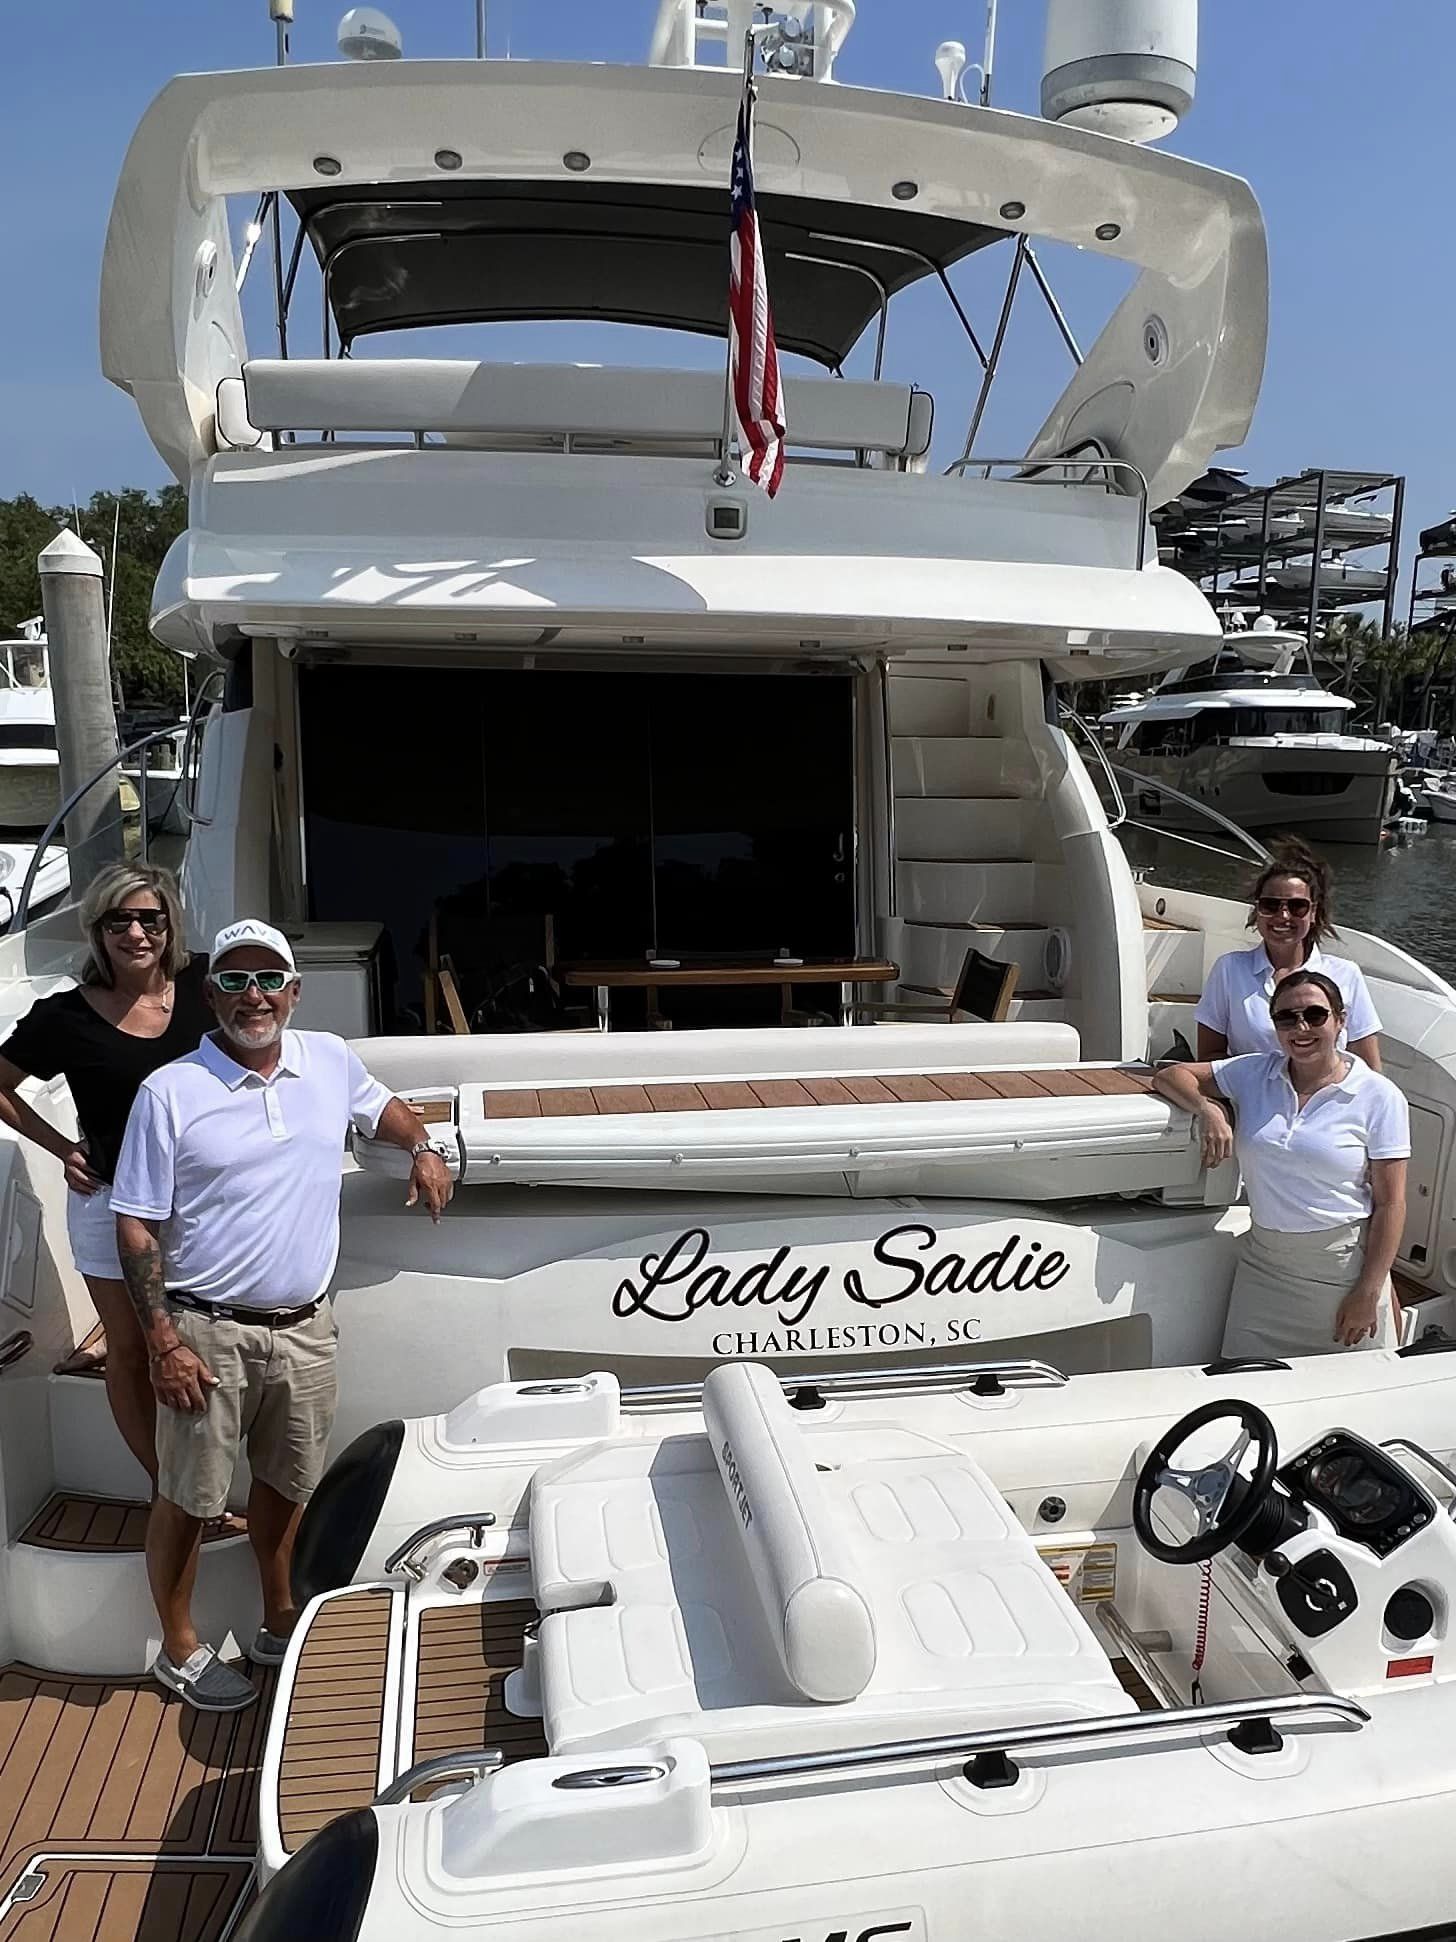 Experience luxury cruising aboard Lady Sadie, Charleston's premier luxury motor yacht.